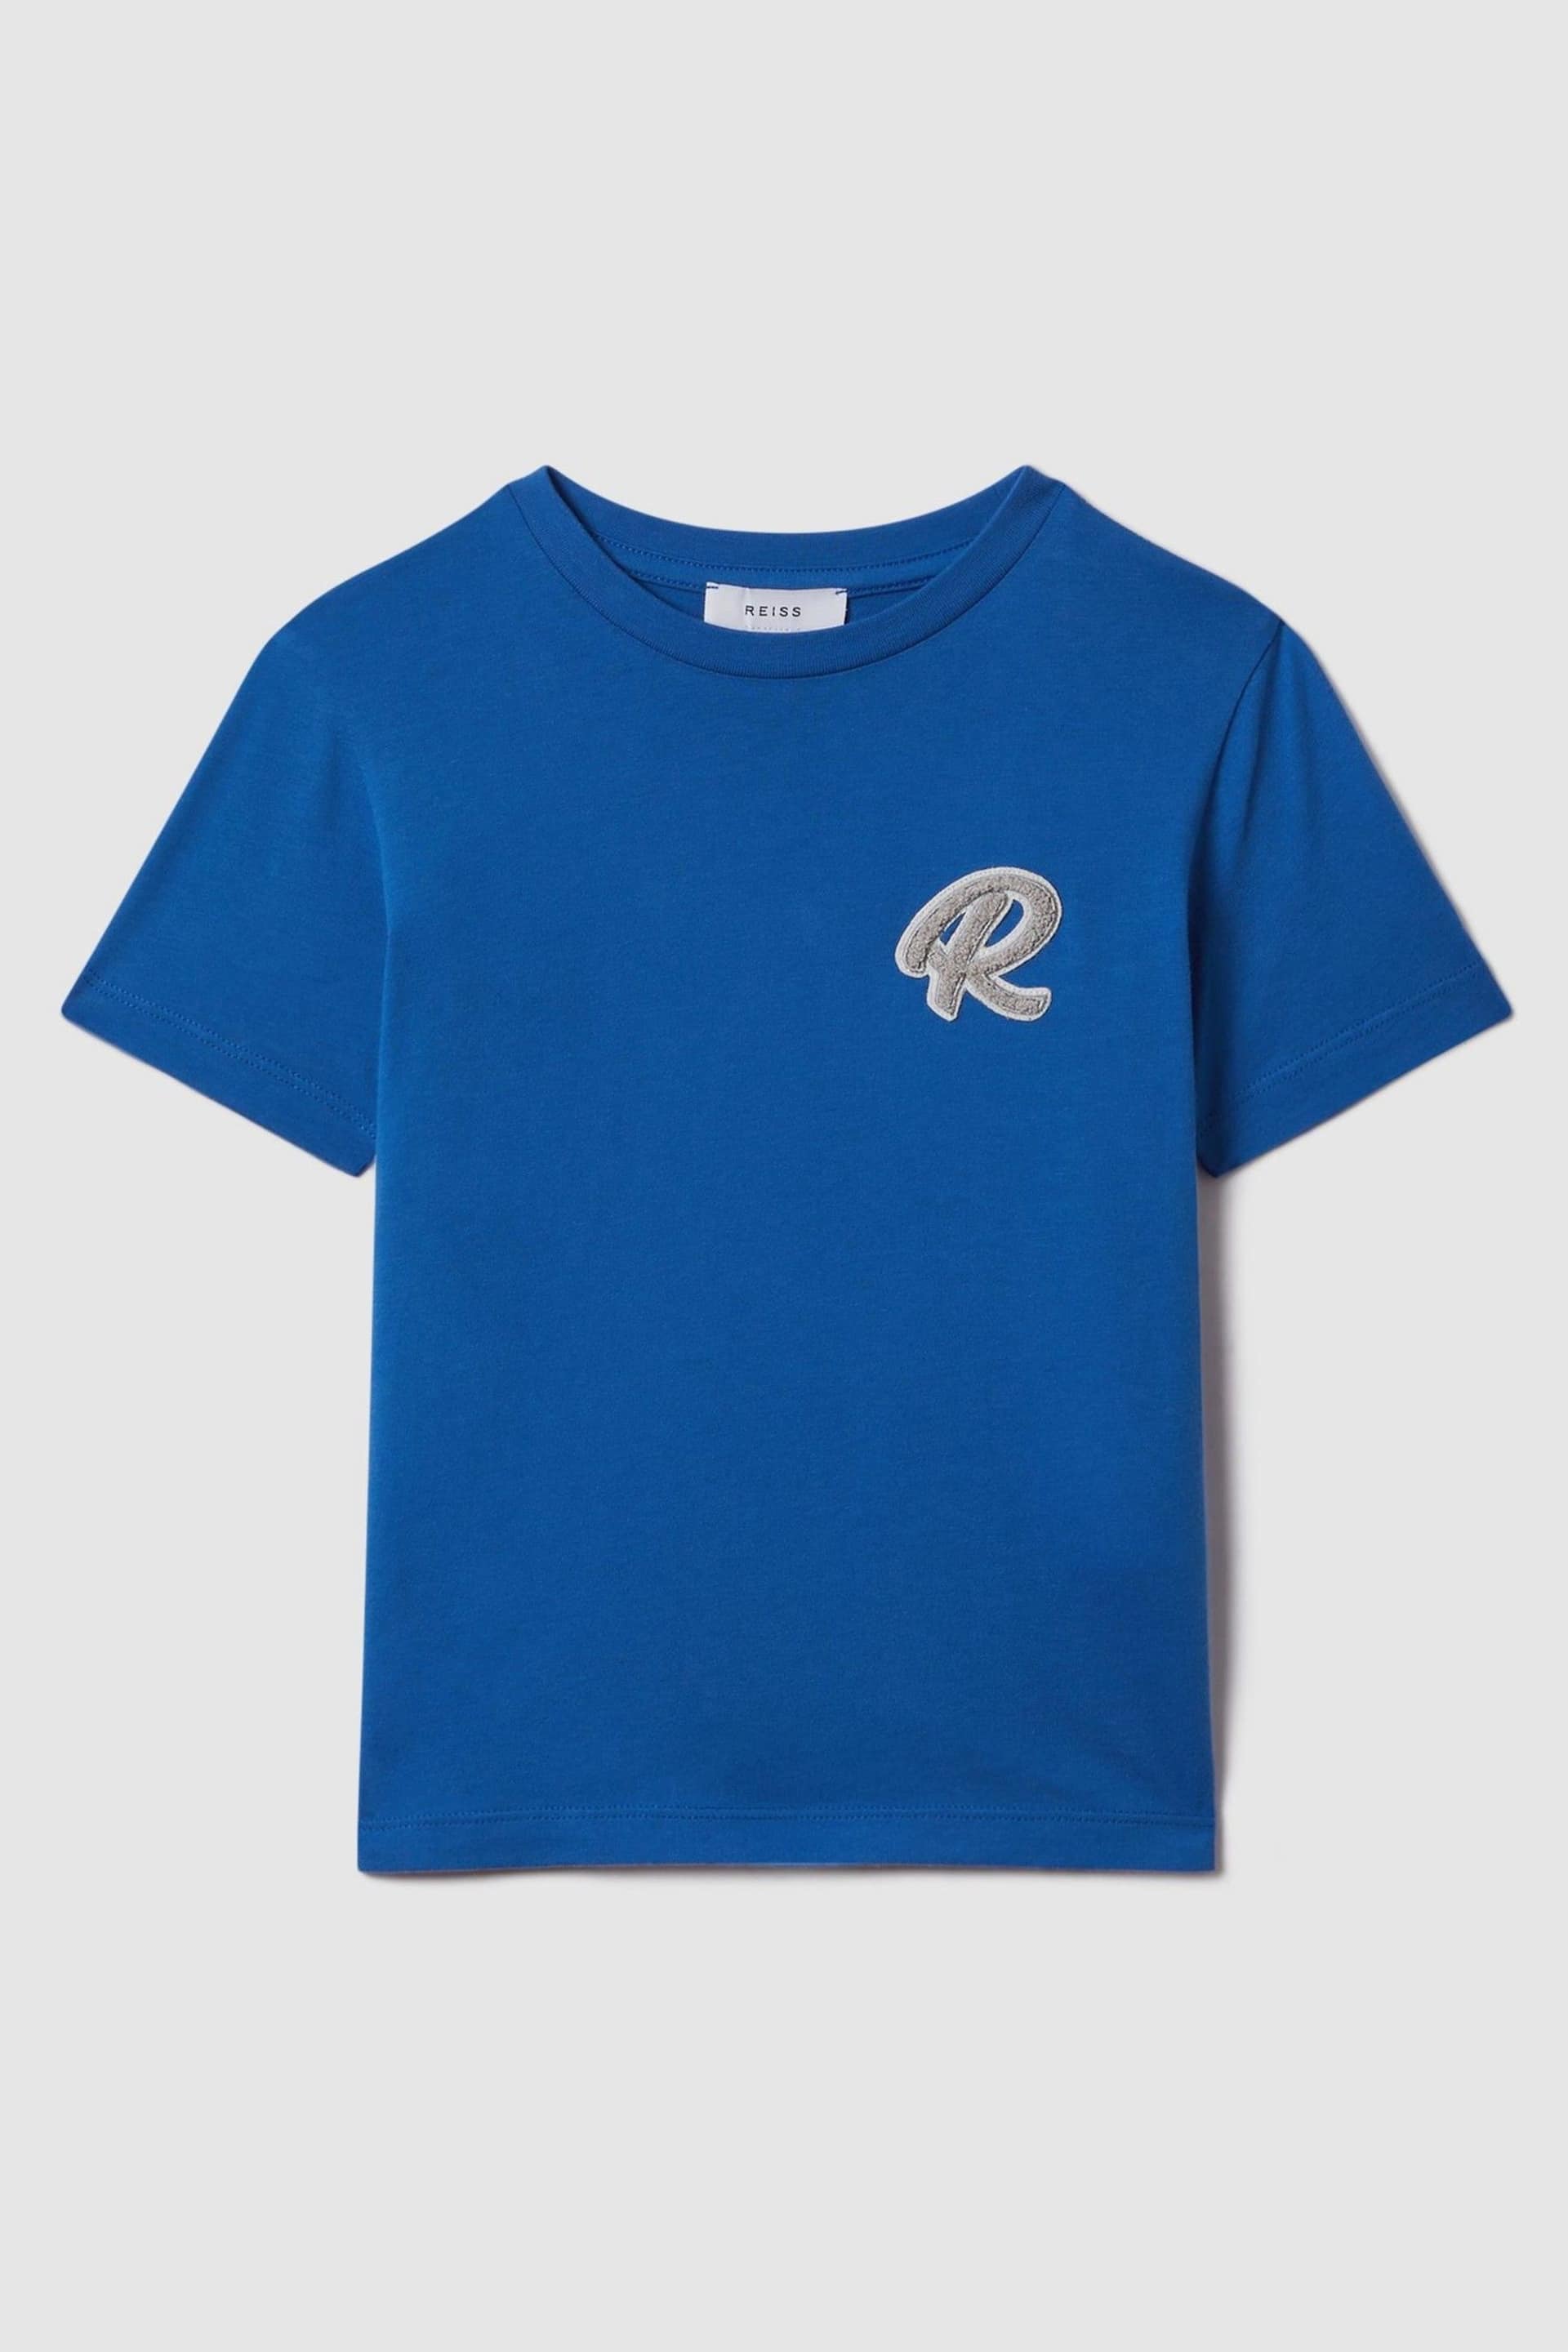 Reiss Lapis Blue Jude Junior Cotton Crew Neck T-Shirt - Image 2 of 5